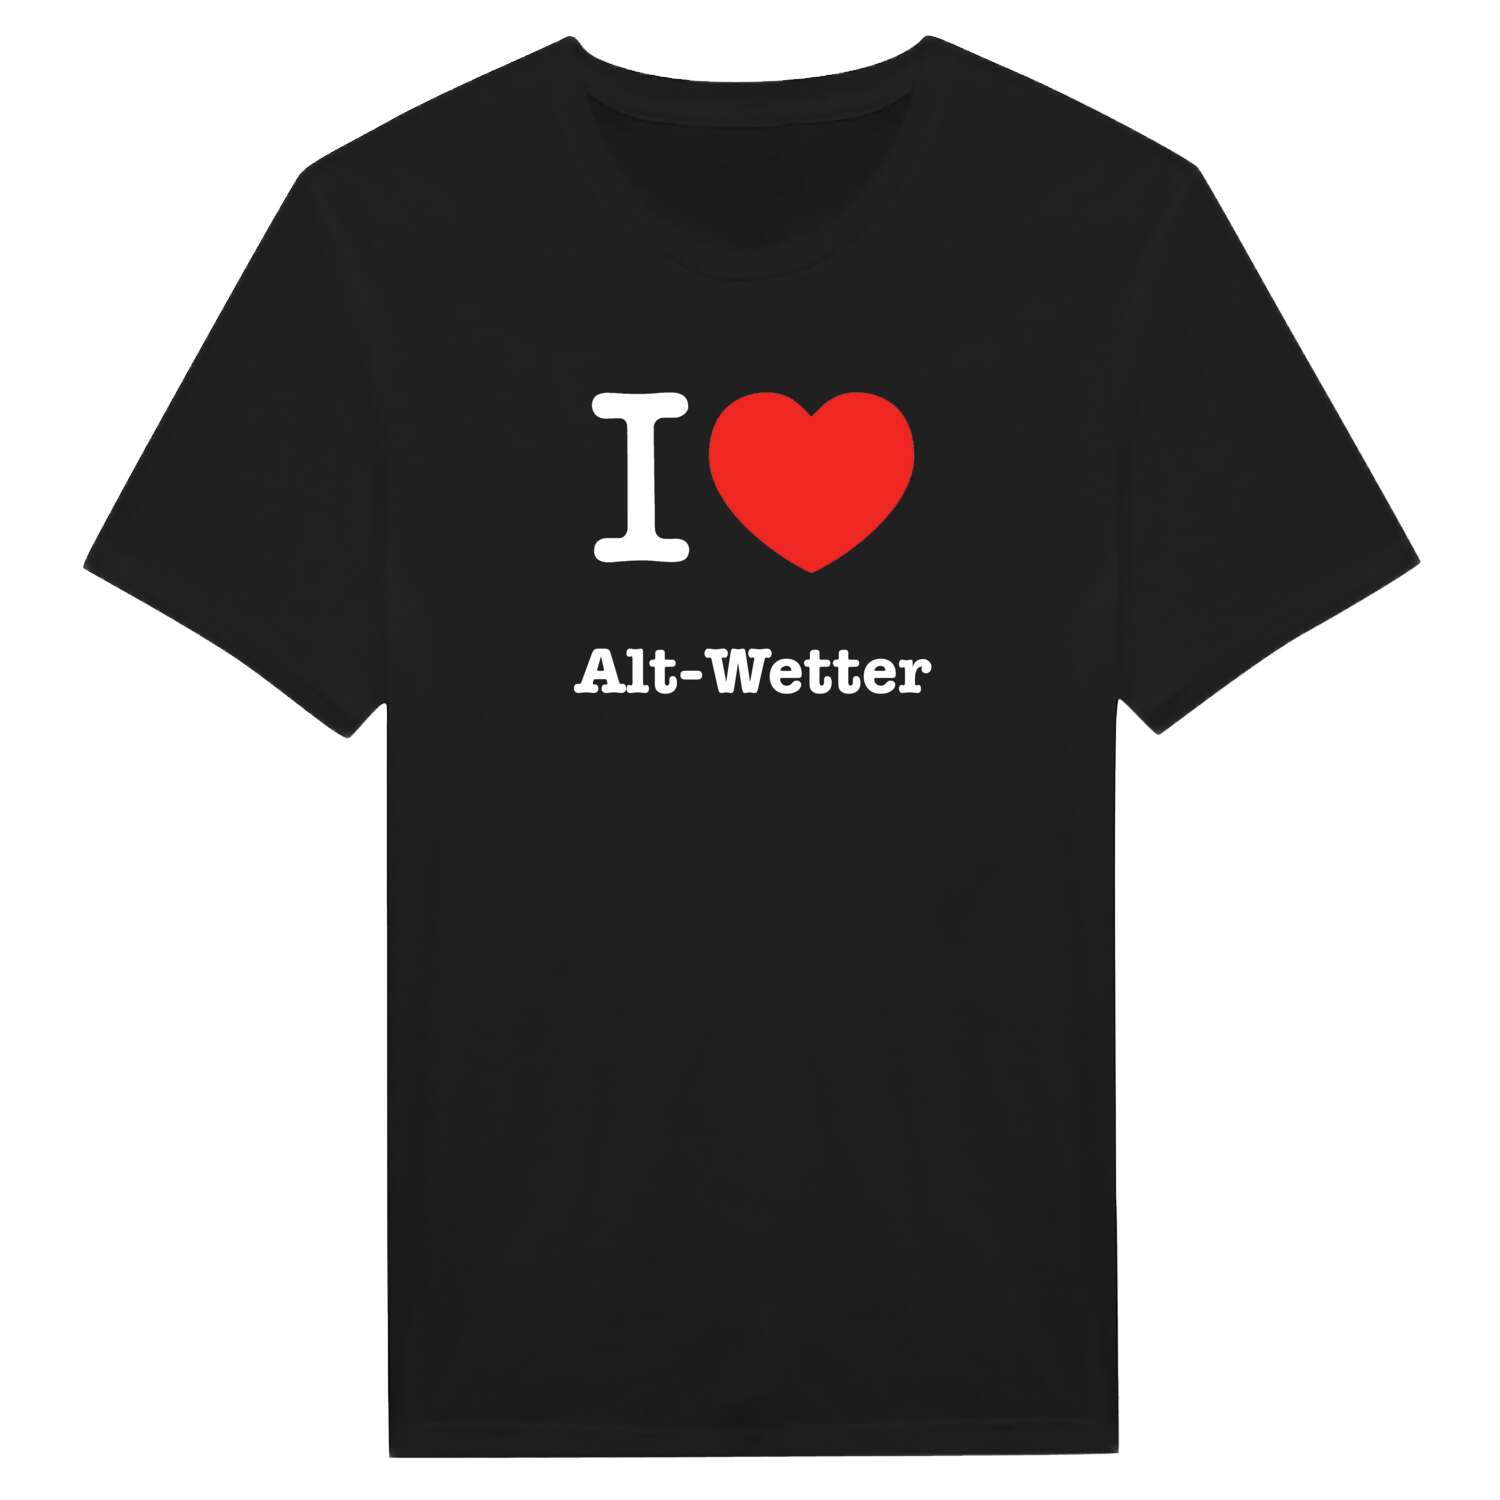 Alt-Wetter T-Shirt »I love«